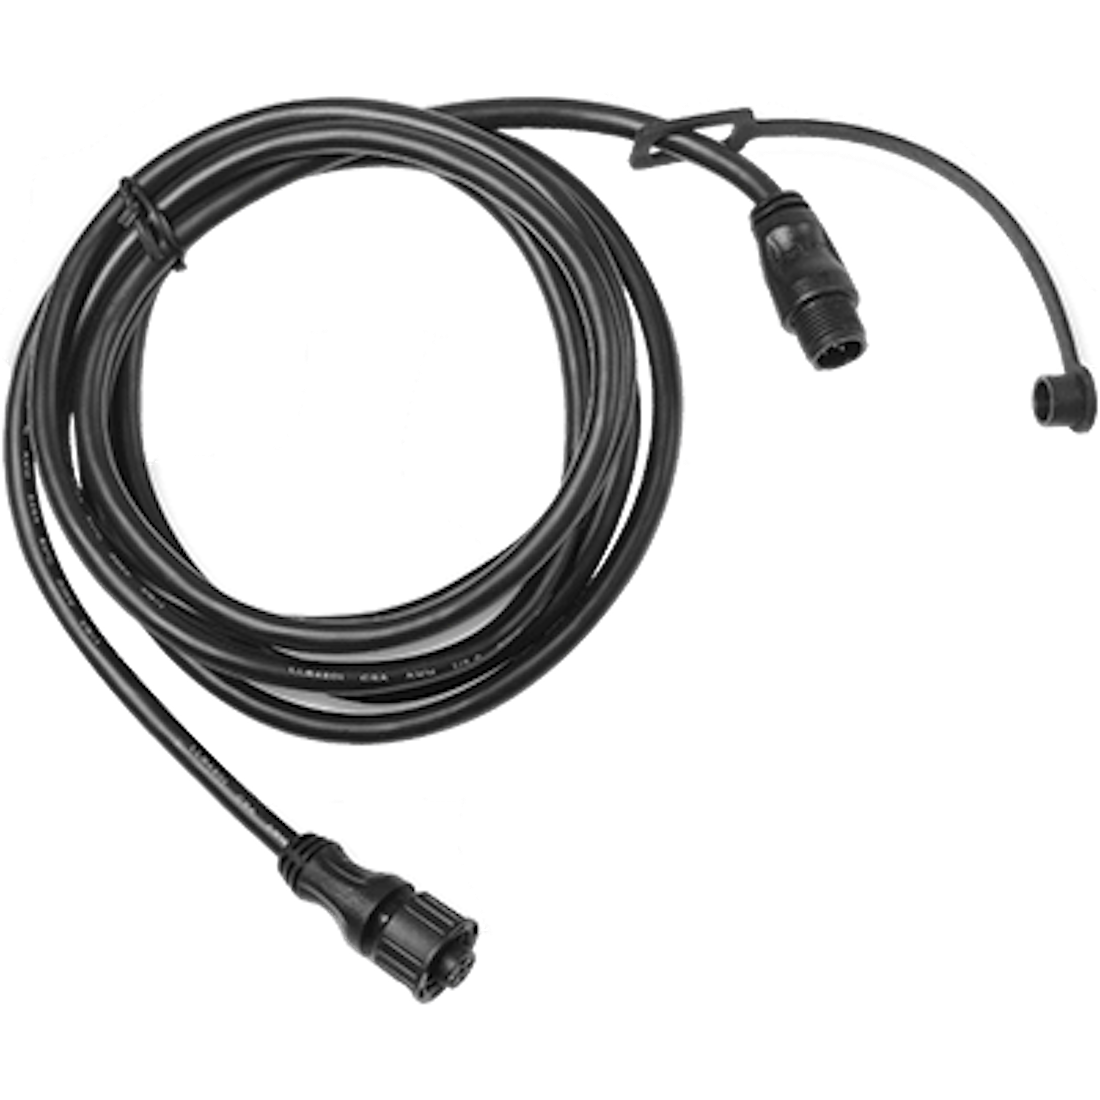 Garmin NMEA 2000 Backbone Cable (2M) [010-11076-00]